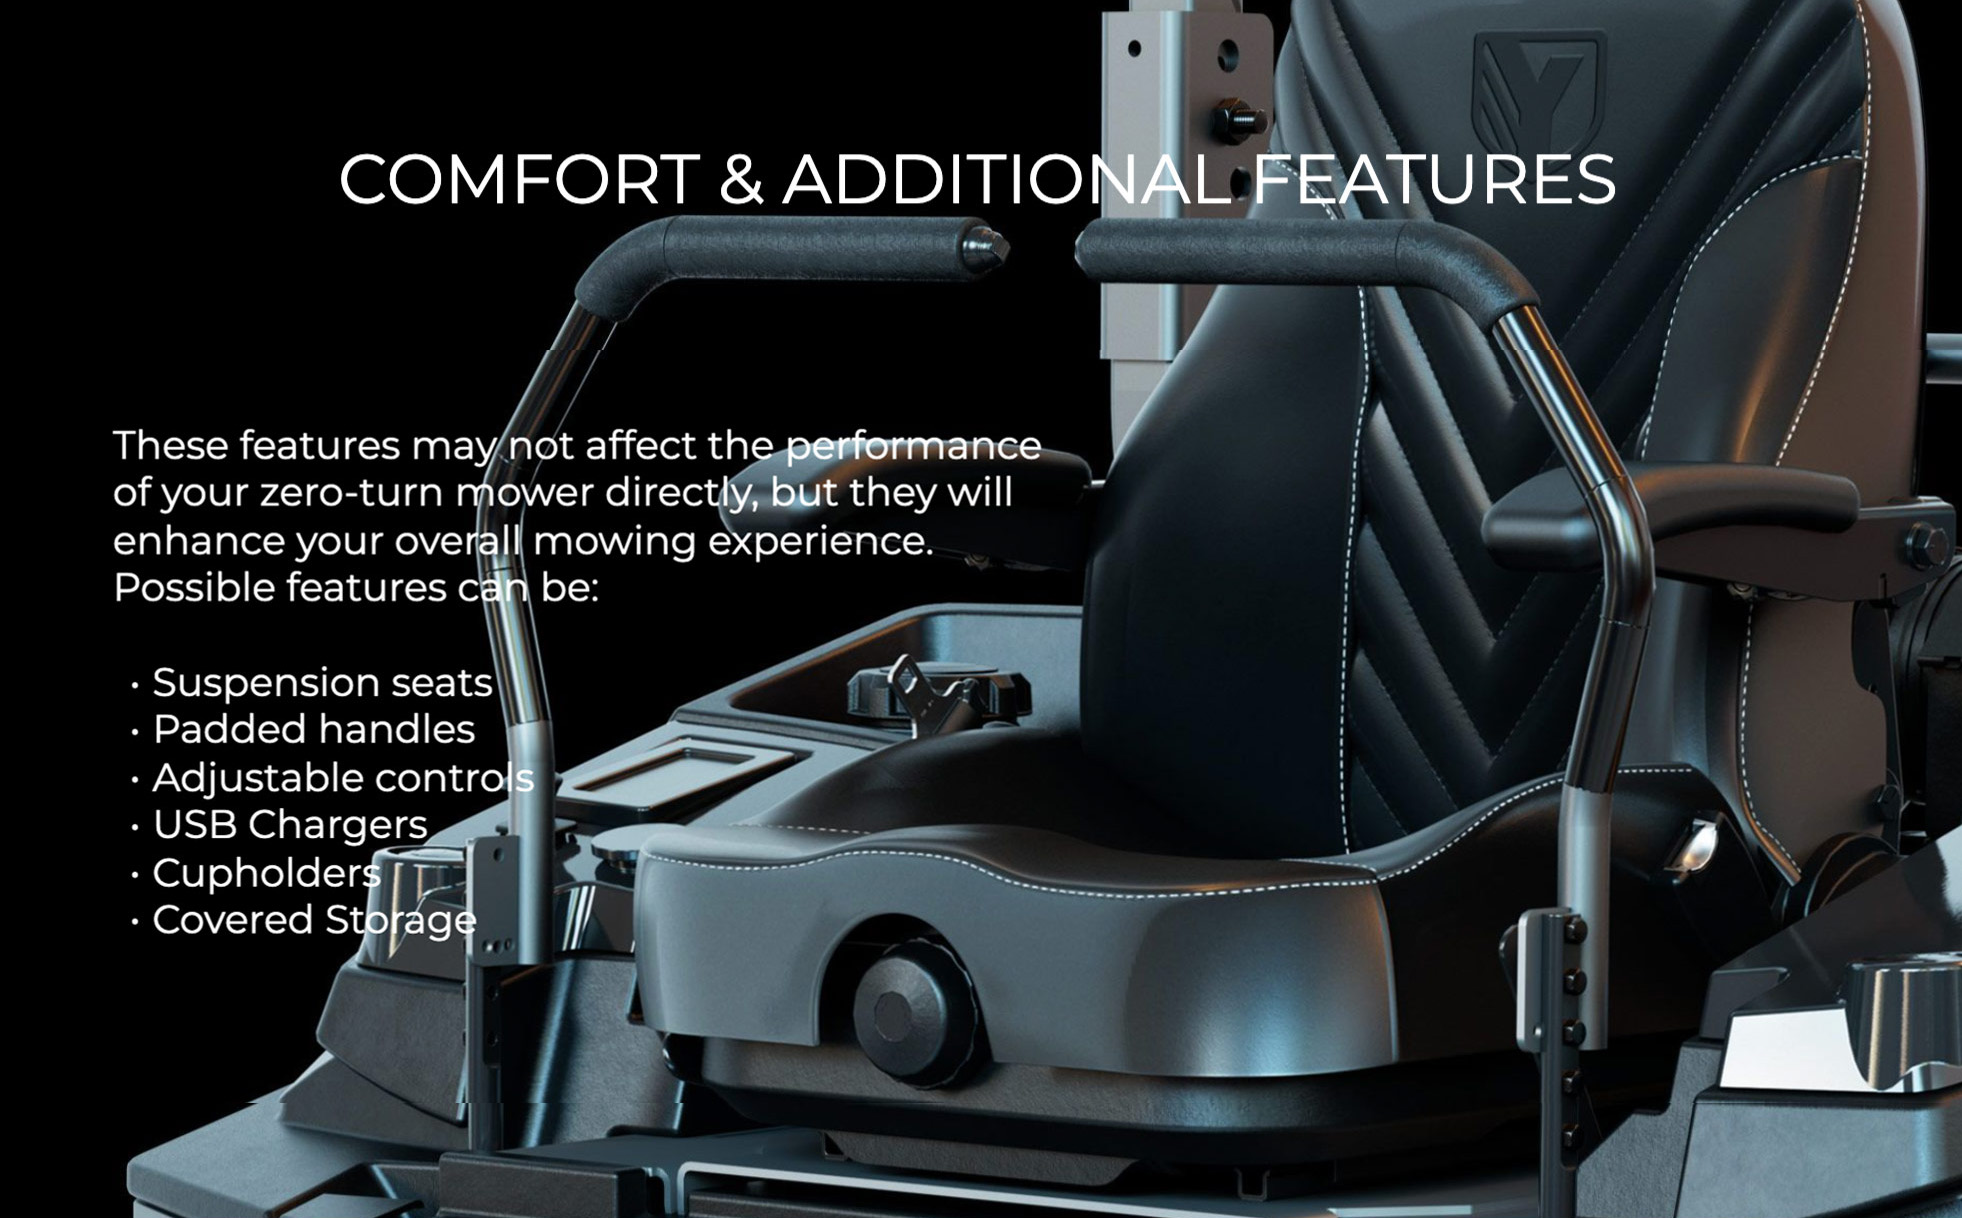 Zero-turn mower features and comfort